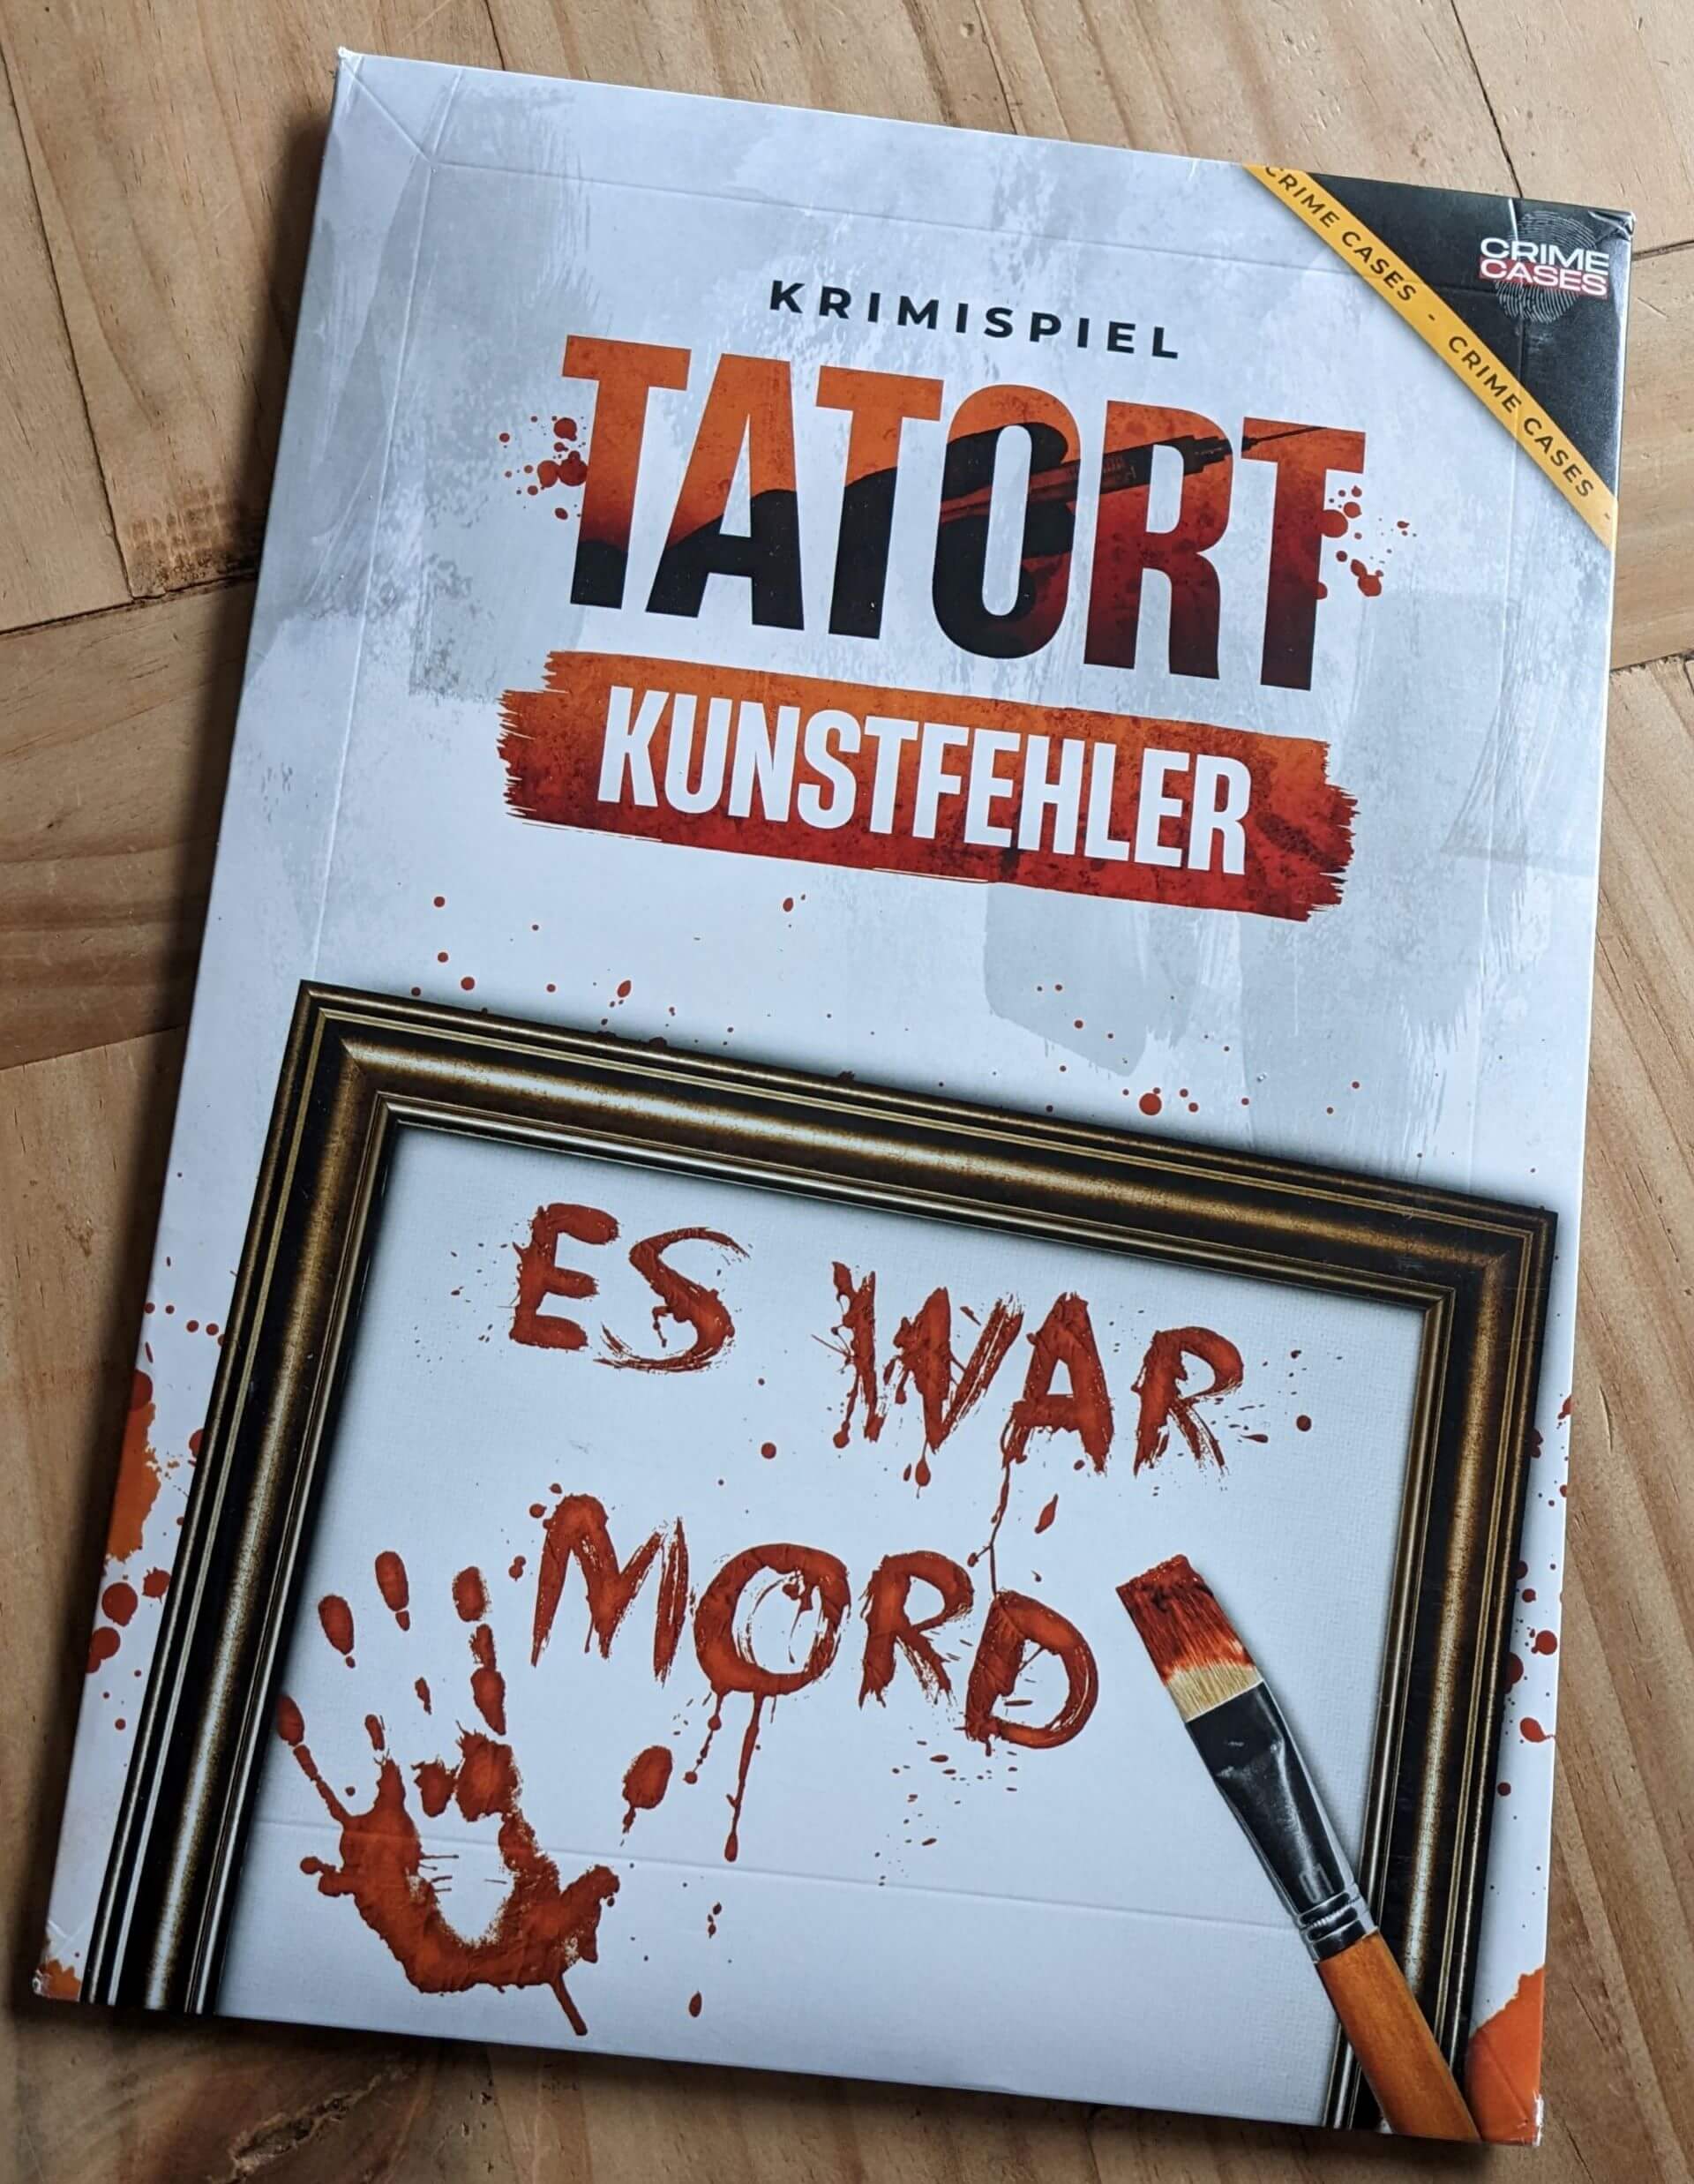 Tatort Kunstfehler Review